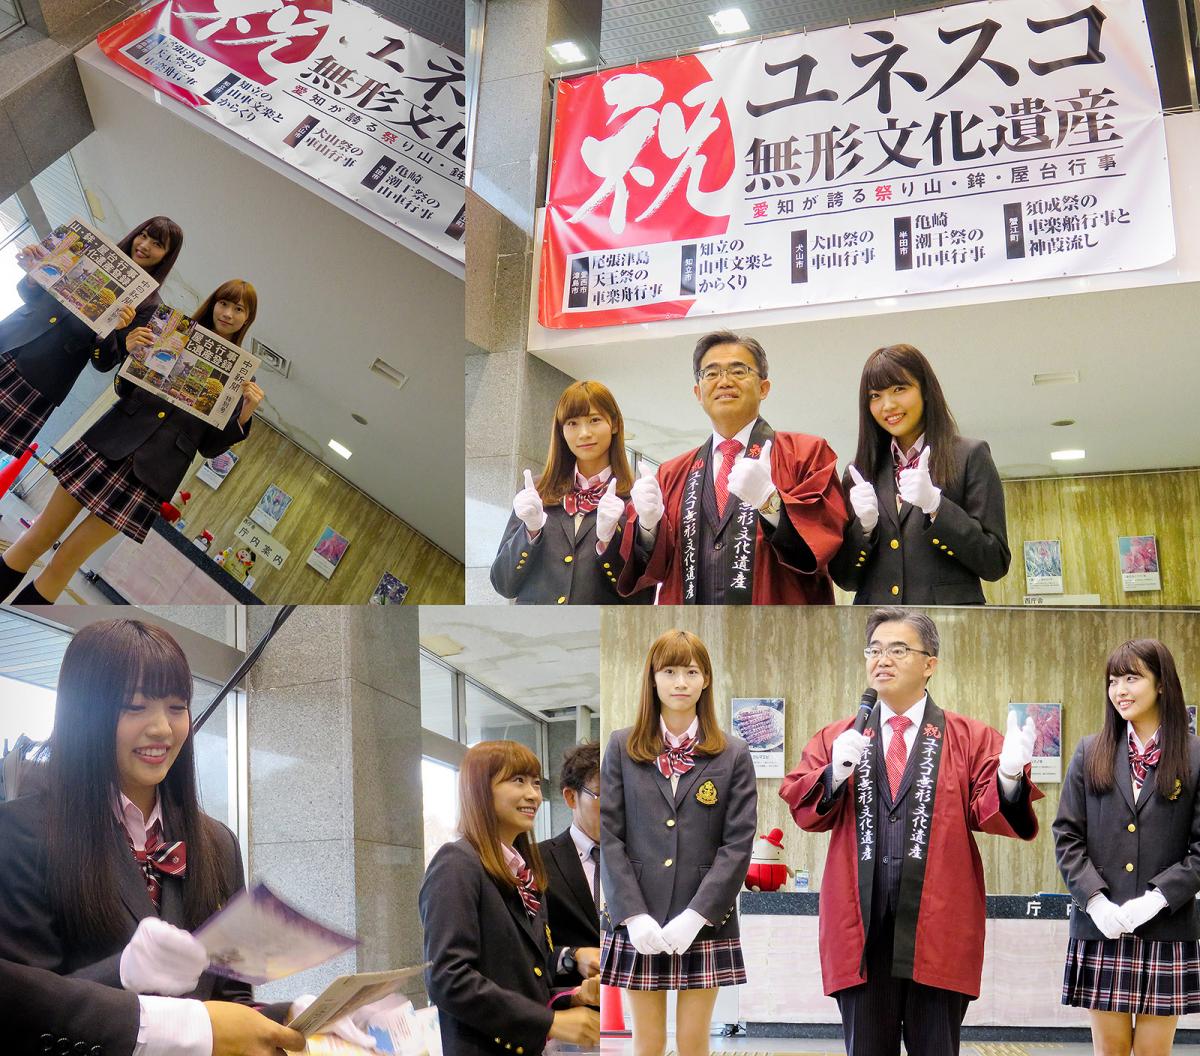 Aichi Governor, SKE48 members unveil banner celebrating addition of Aichi festivals to Unesco’s heritage